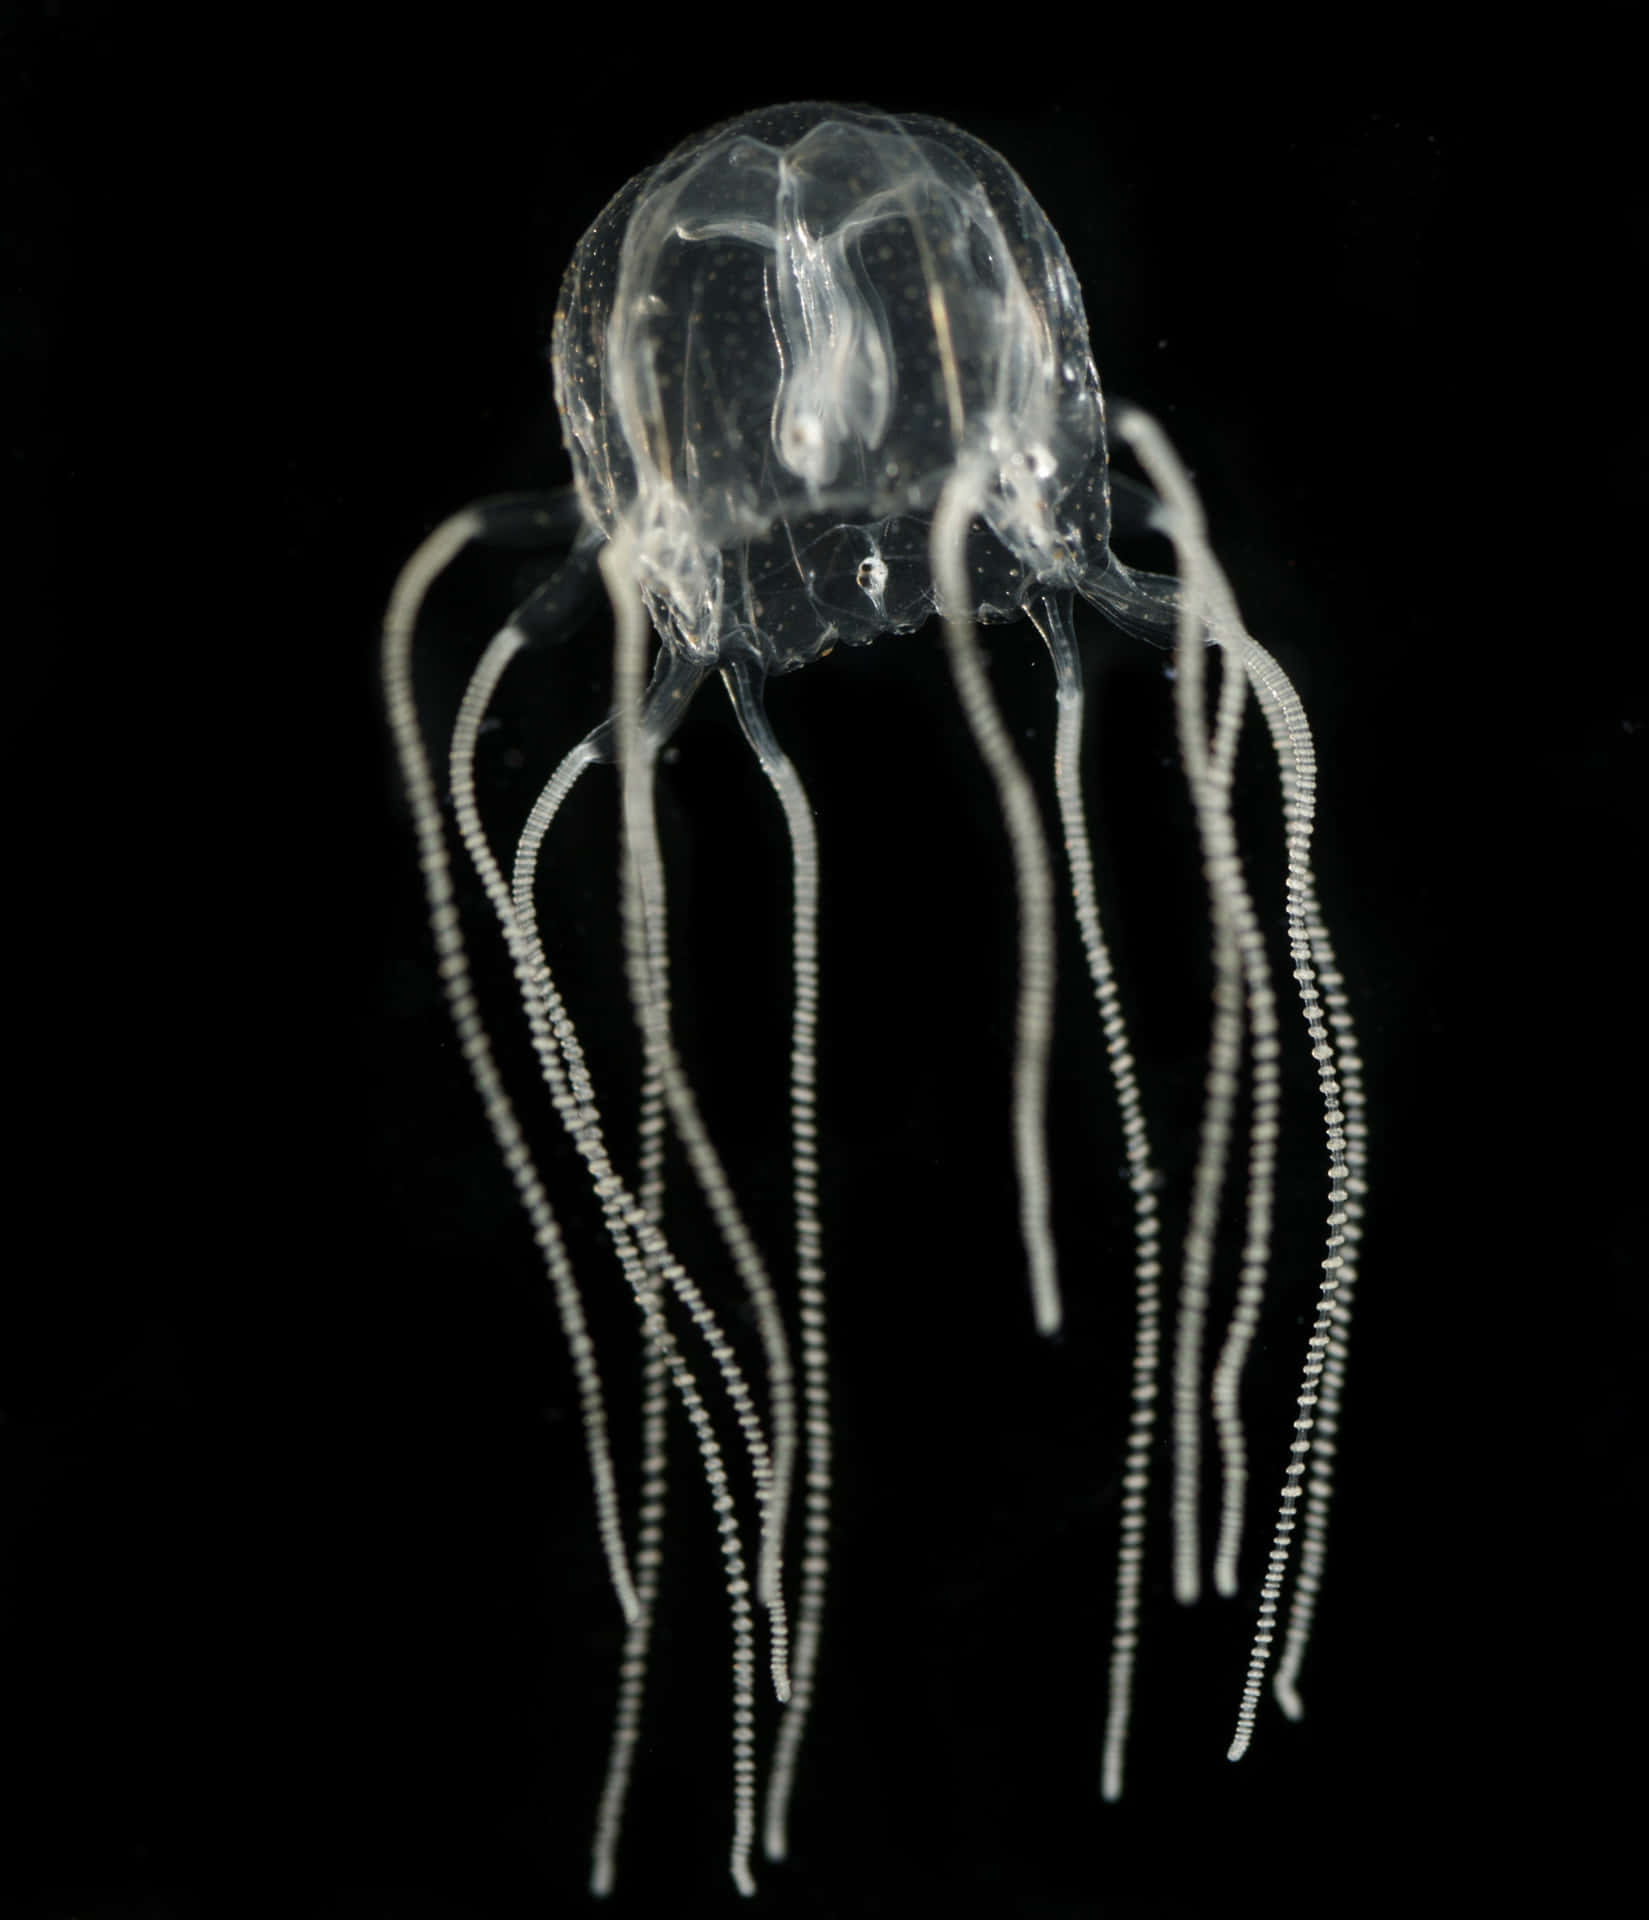 Box Jellyfish Transparent Tentacles Wallpaper